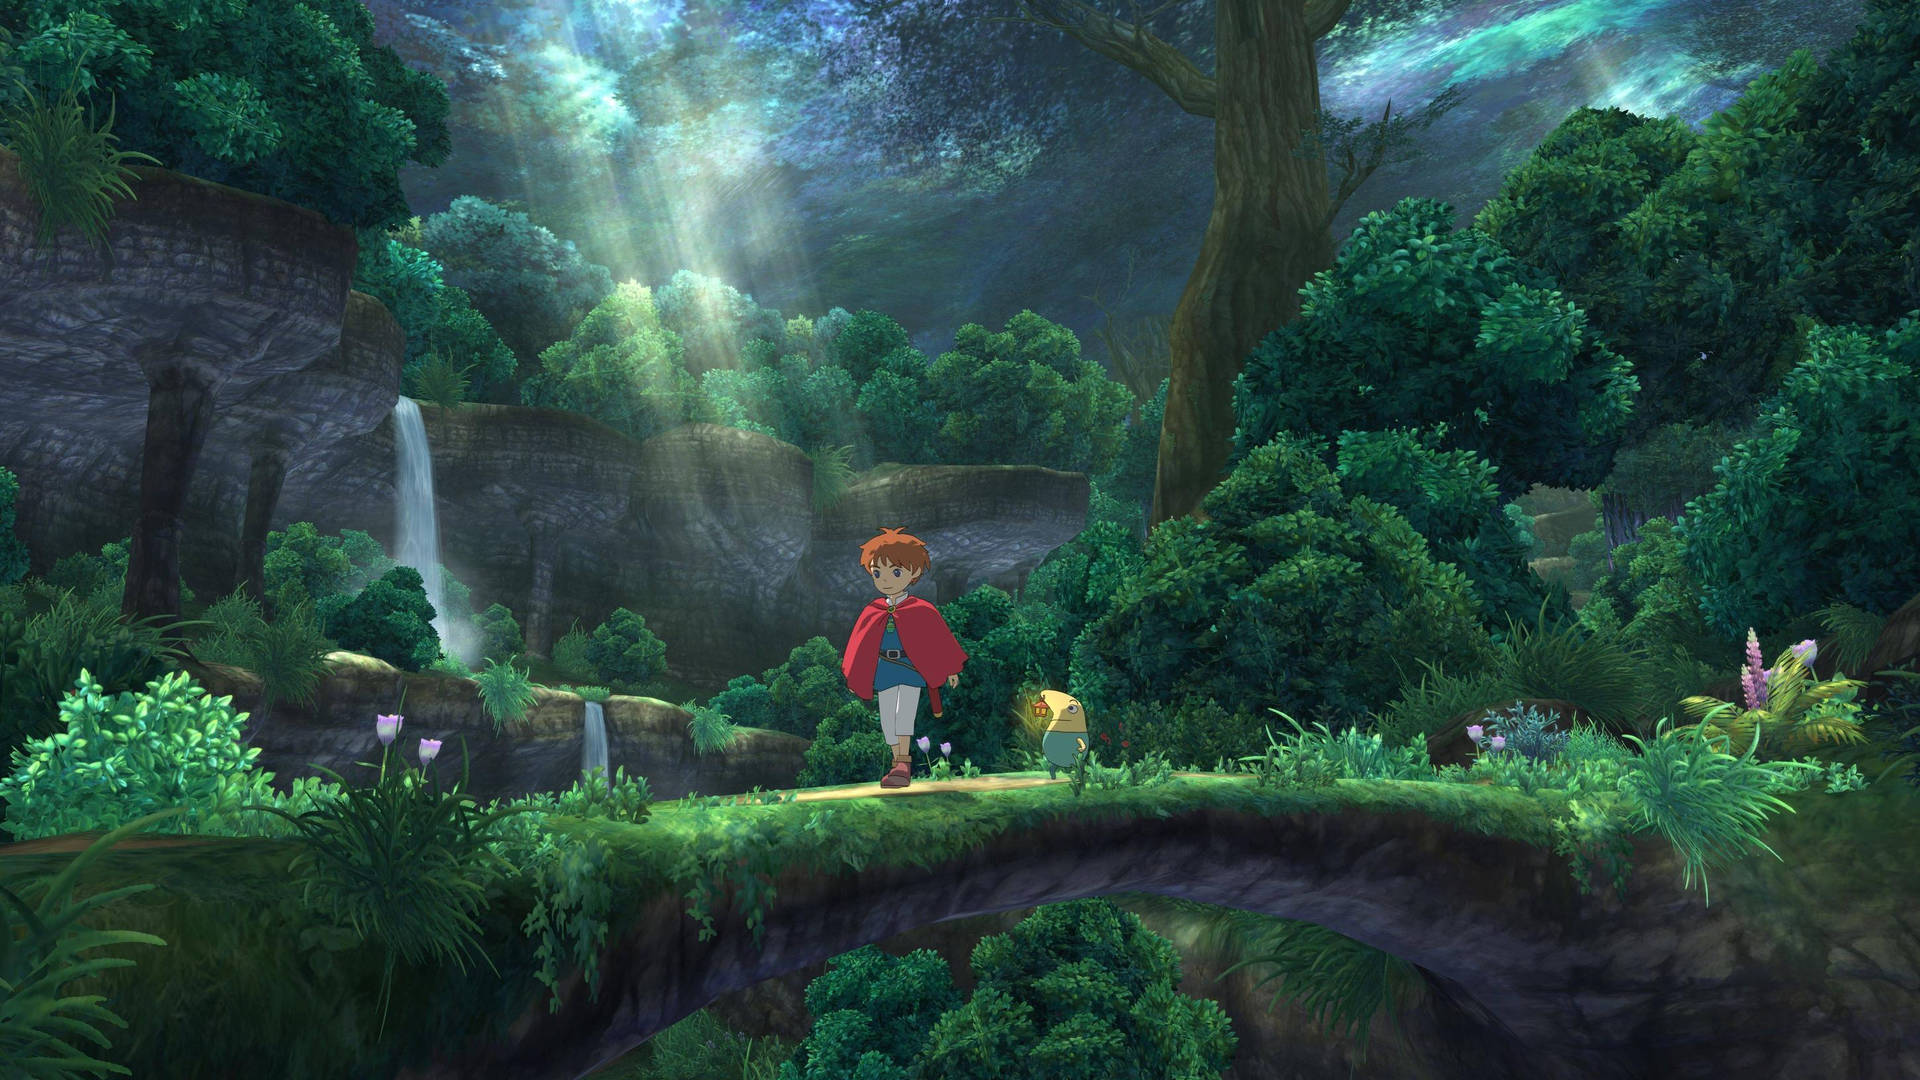 Beautiful Studio Ghibli Scenery Forest Background